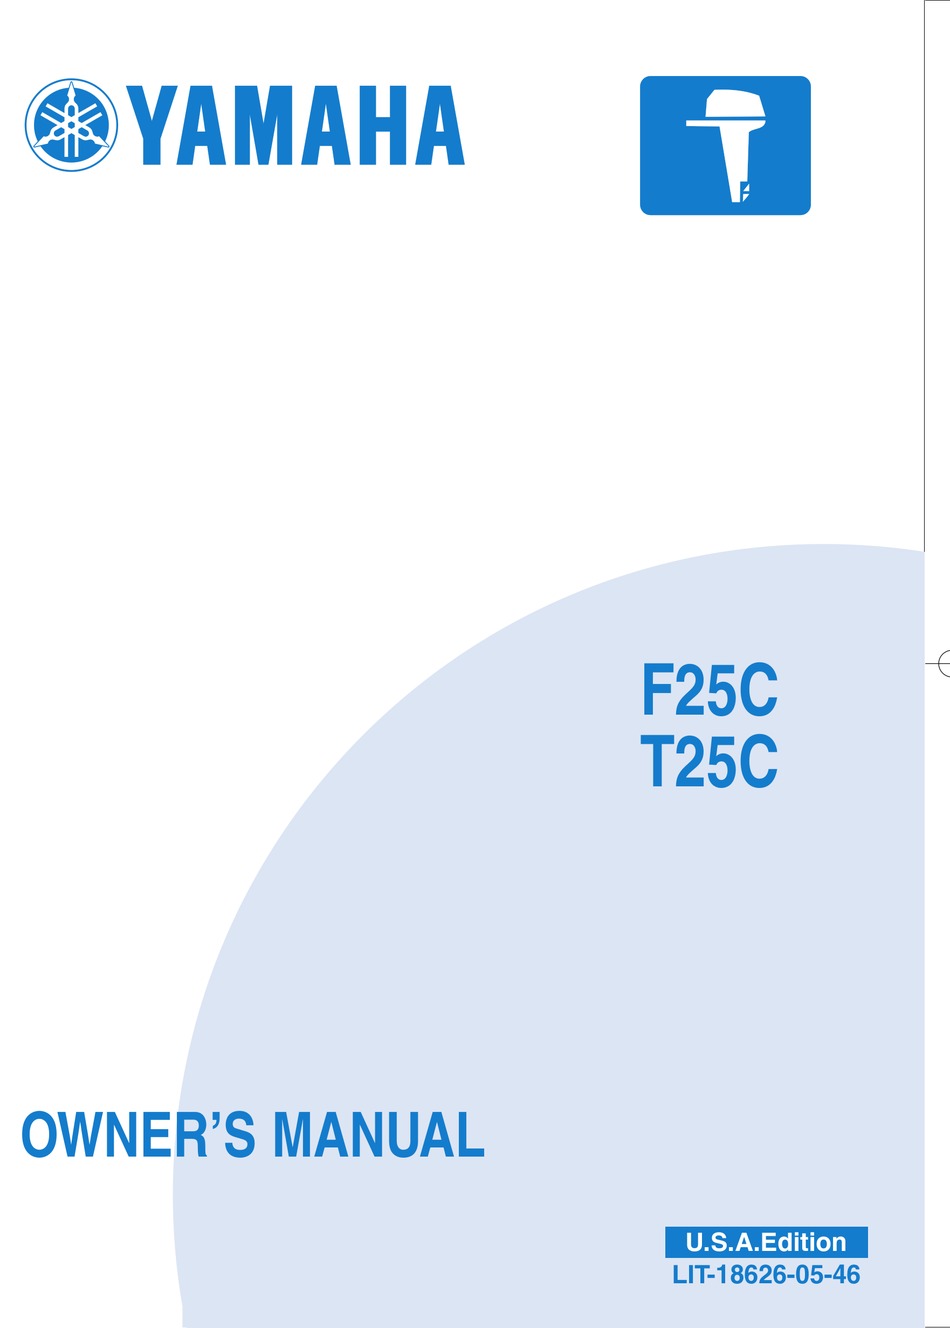 YAMAHA F25C OWNER'S MANUAL Pdf Download | ManualsLib